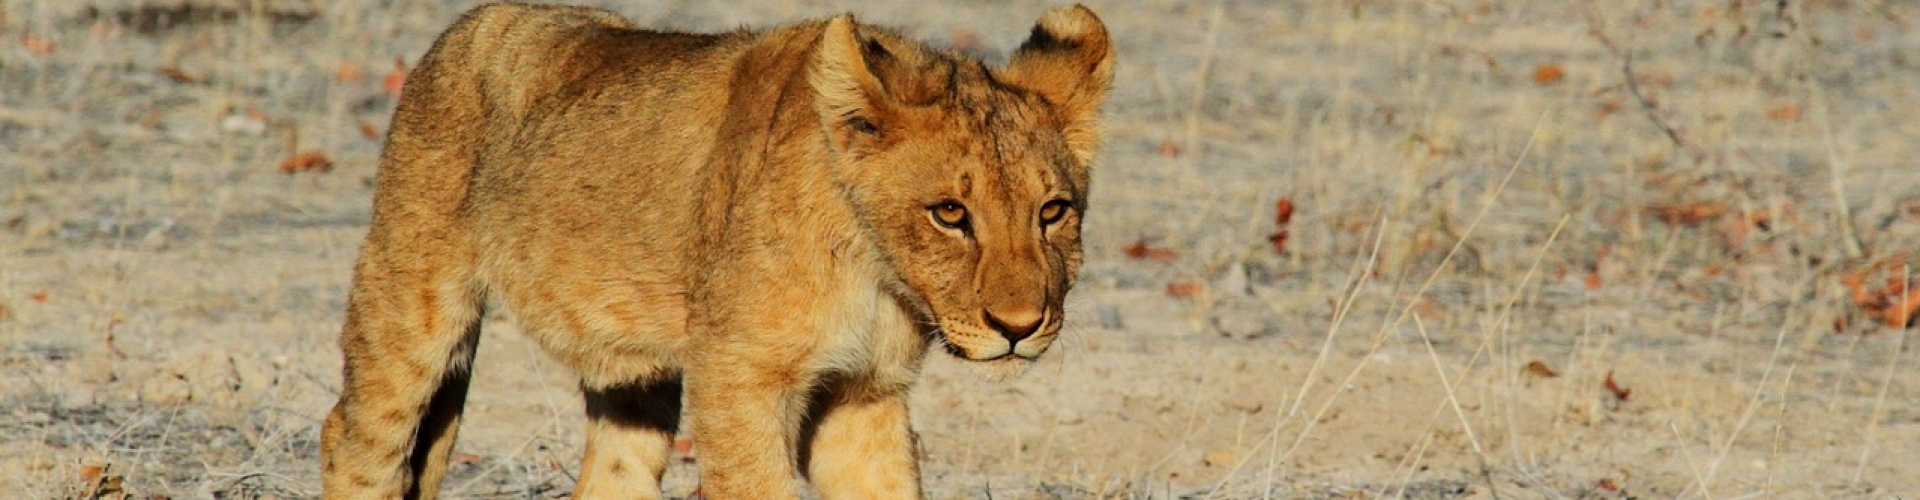 Namibia Africa Holiday Lion